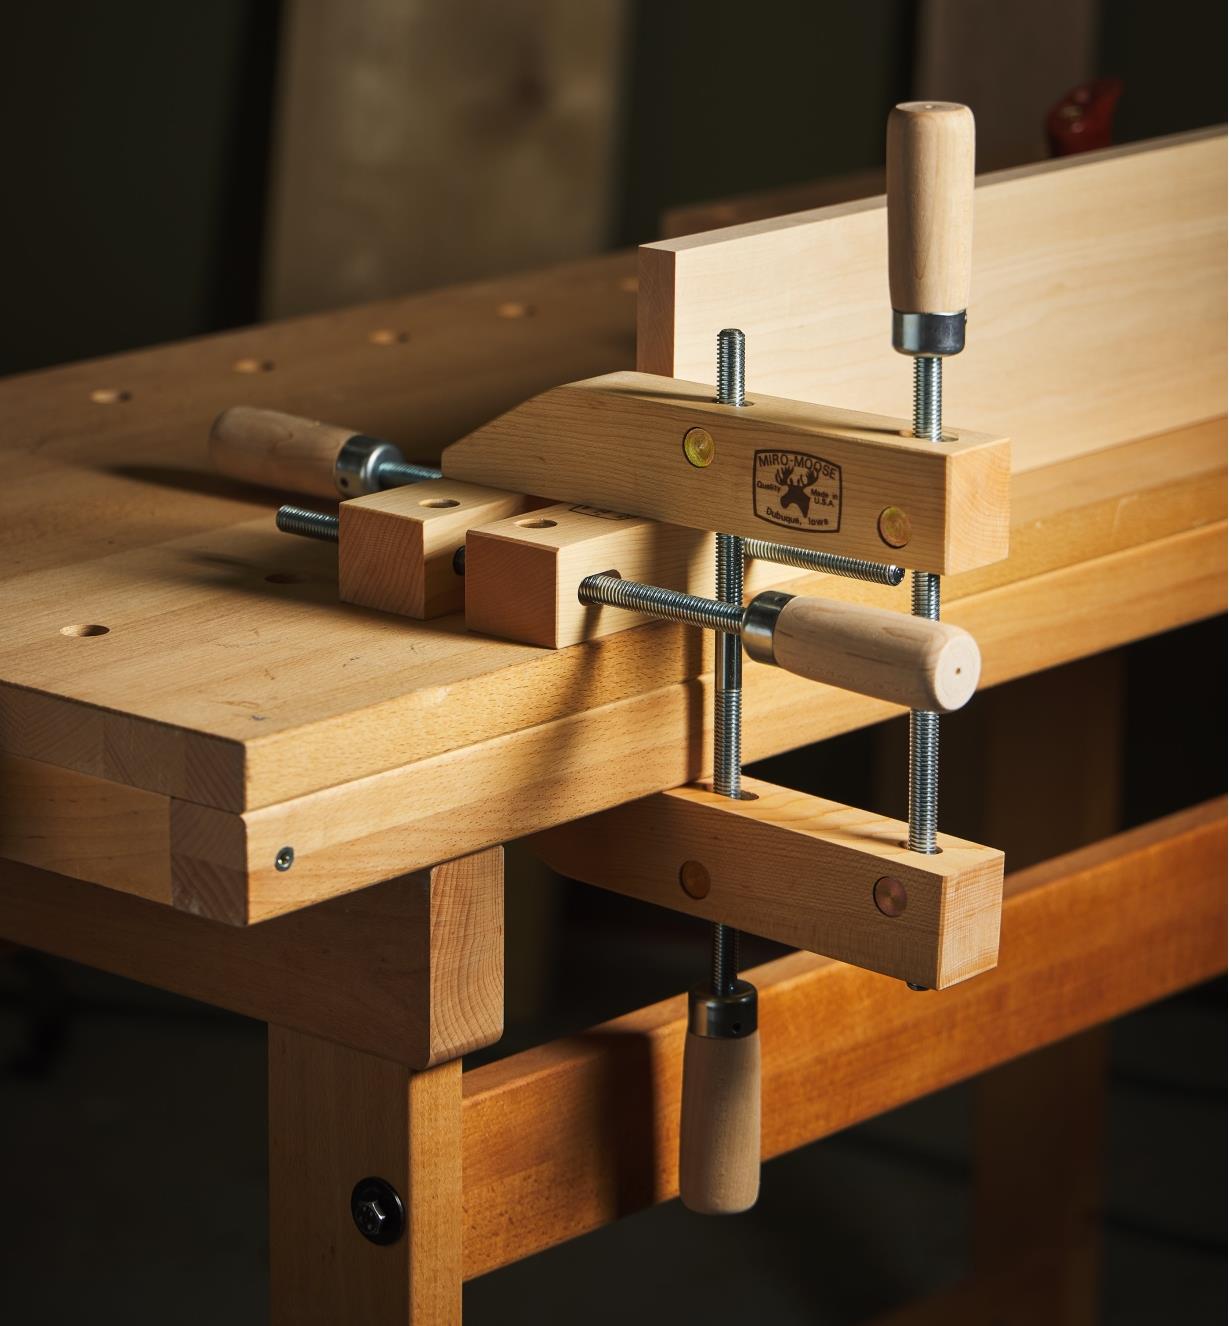 A wooden handscrew holding a workpiece on a workbench